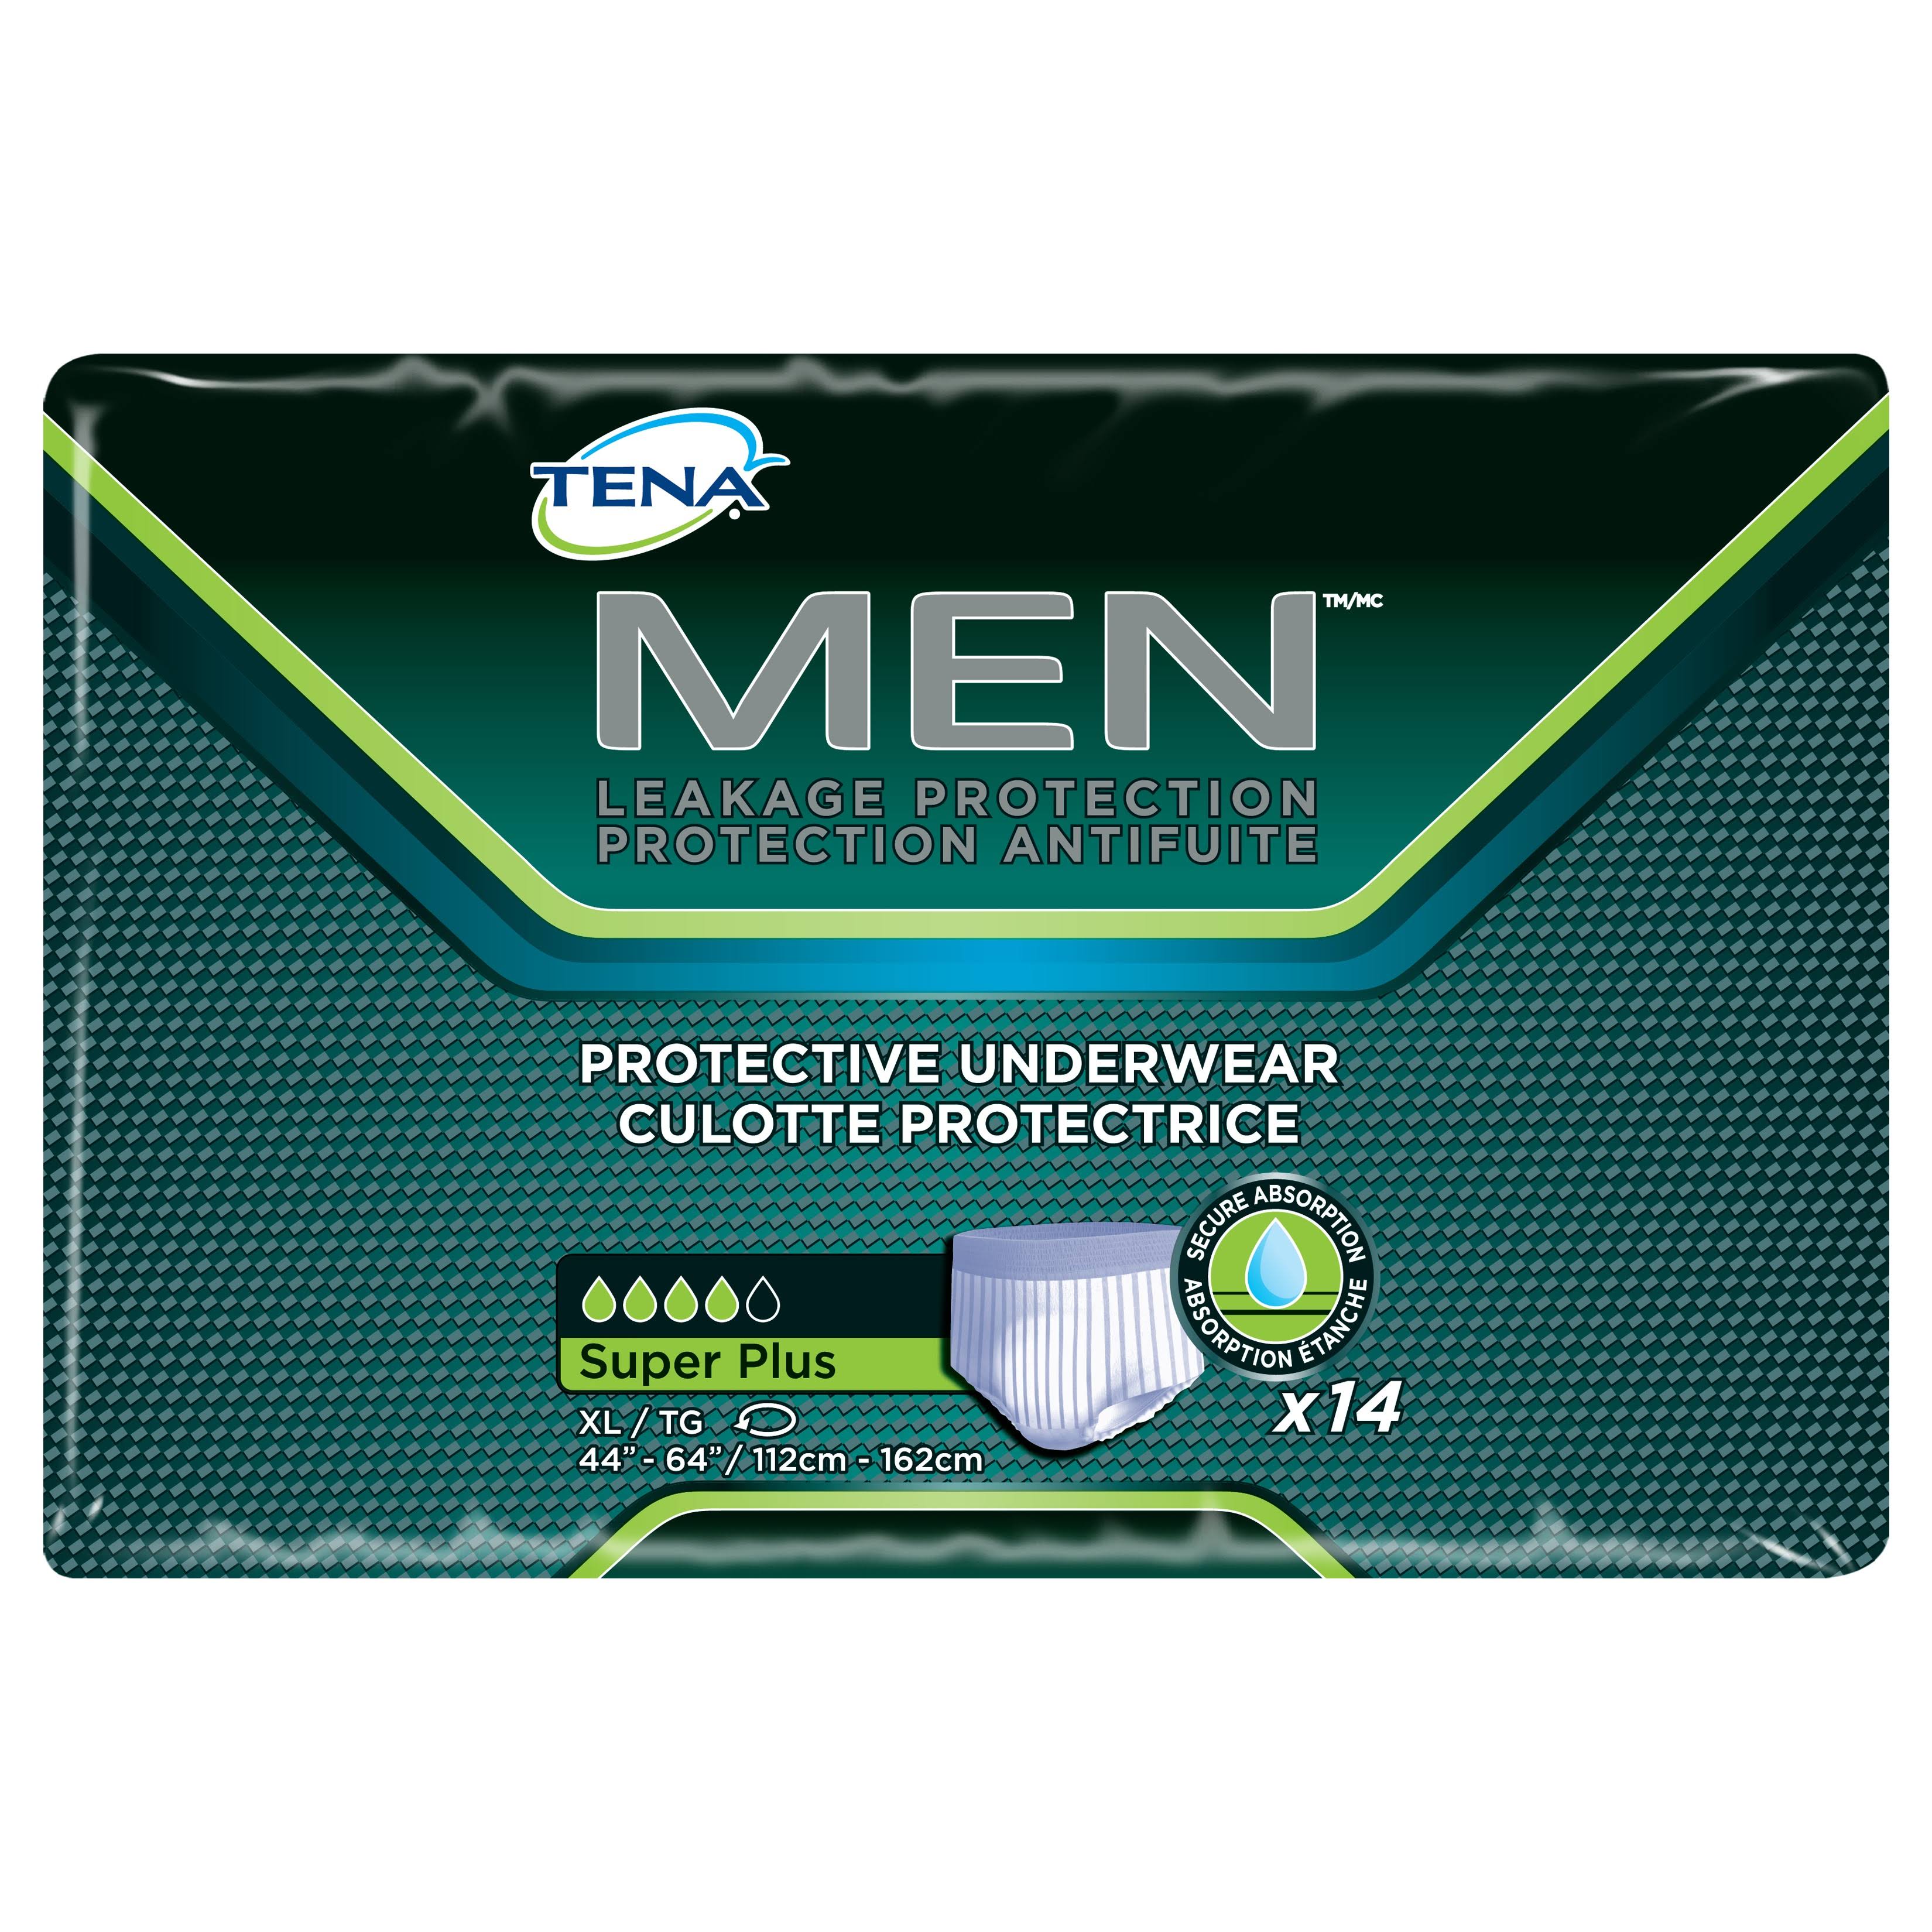 Tena Men Leakage Protection Super Plus Protective Underwear - X-Large, 14 Pack